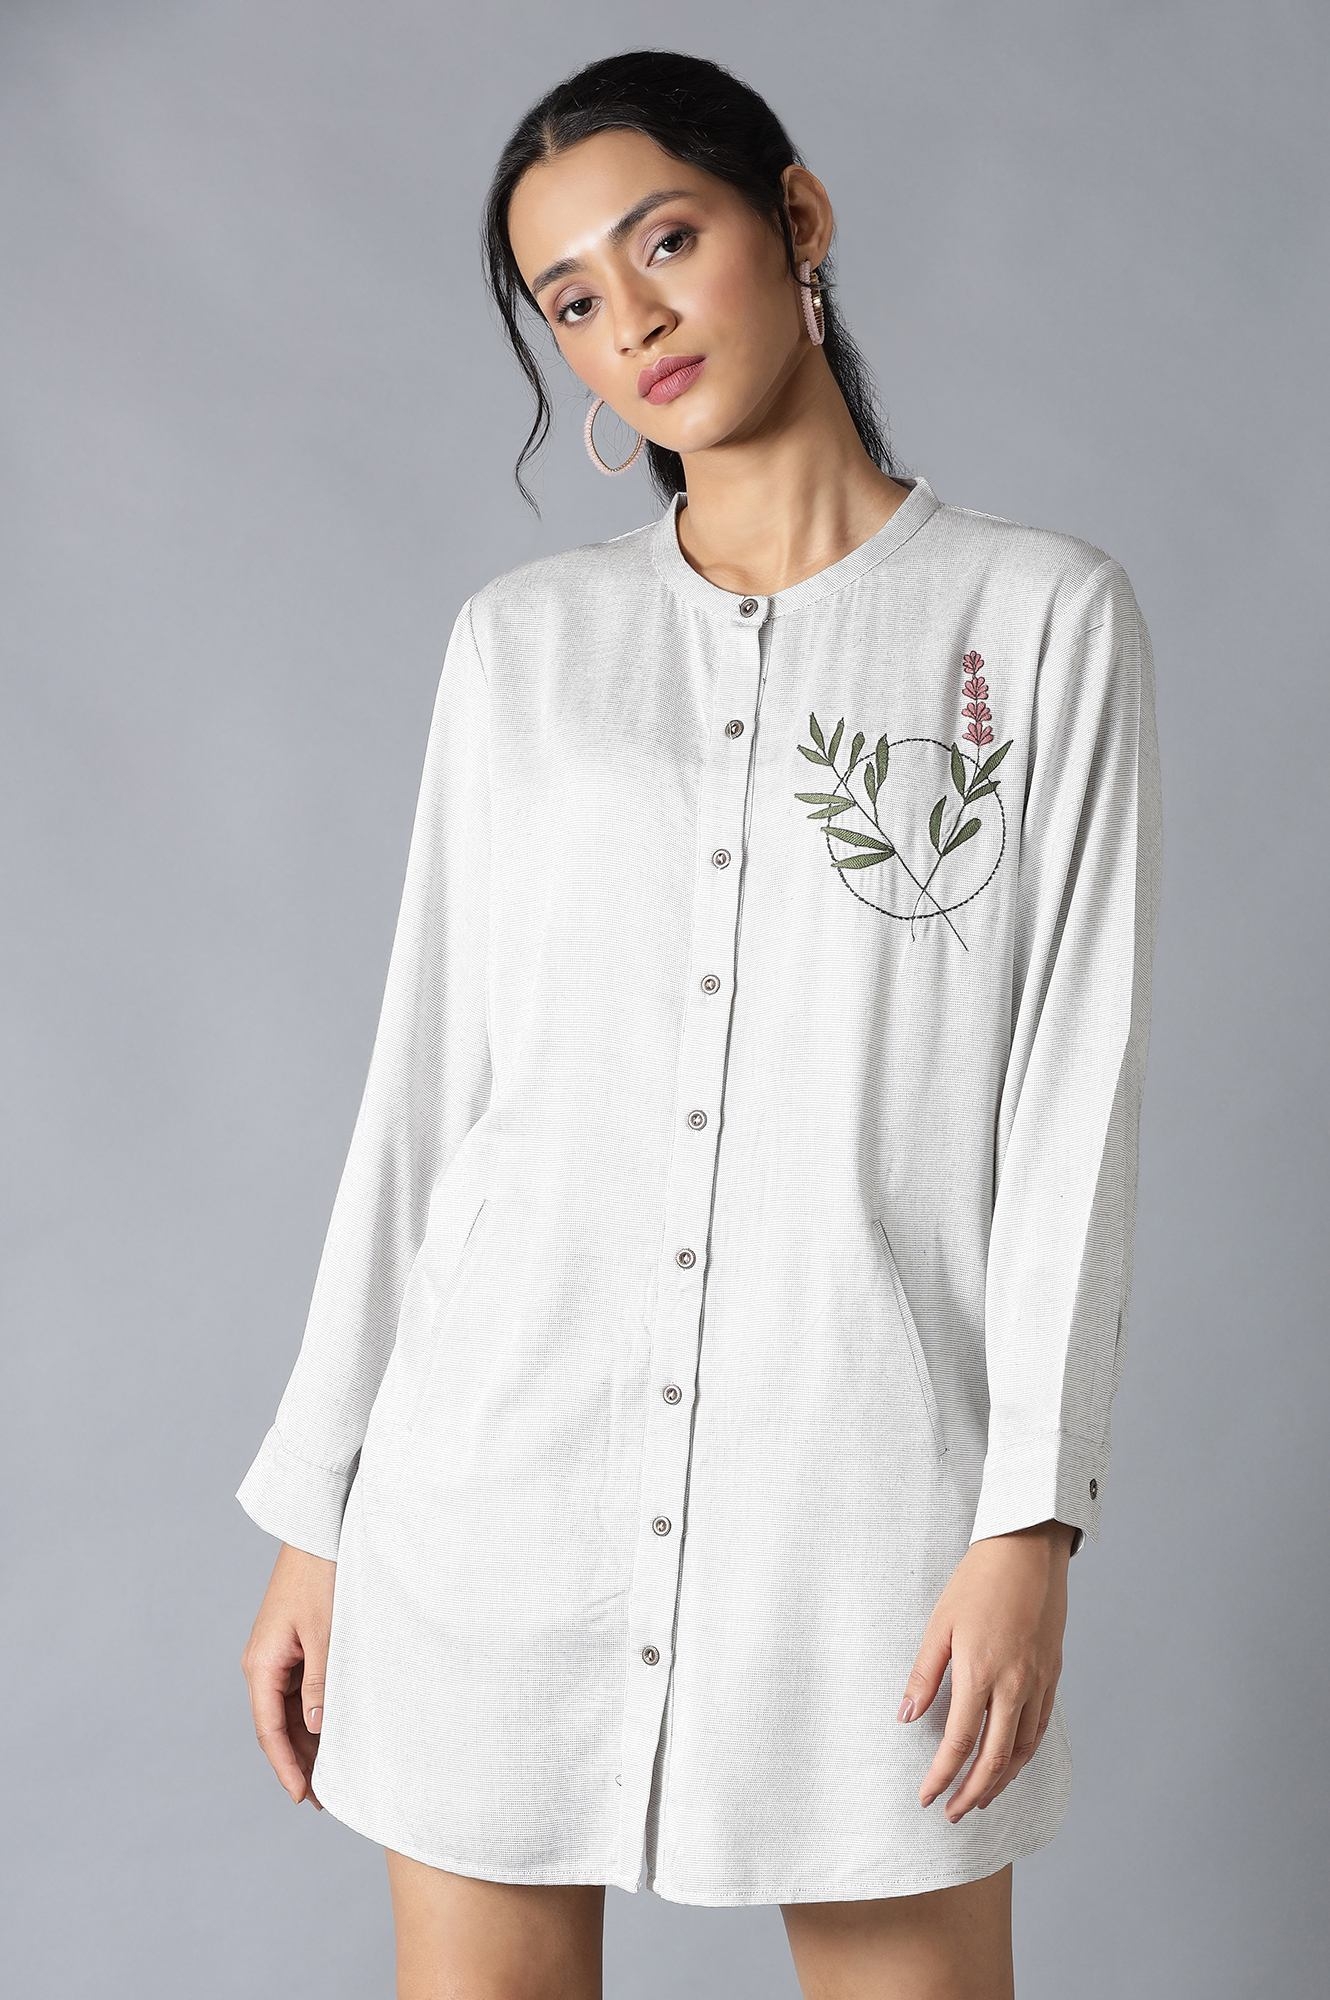 W | W Light Grey Yarn-Dyed Tunic with Thread Embroidery in Mandarin Neck